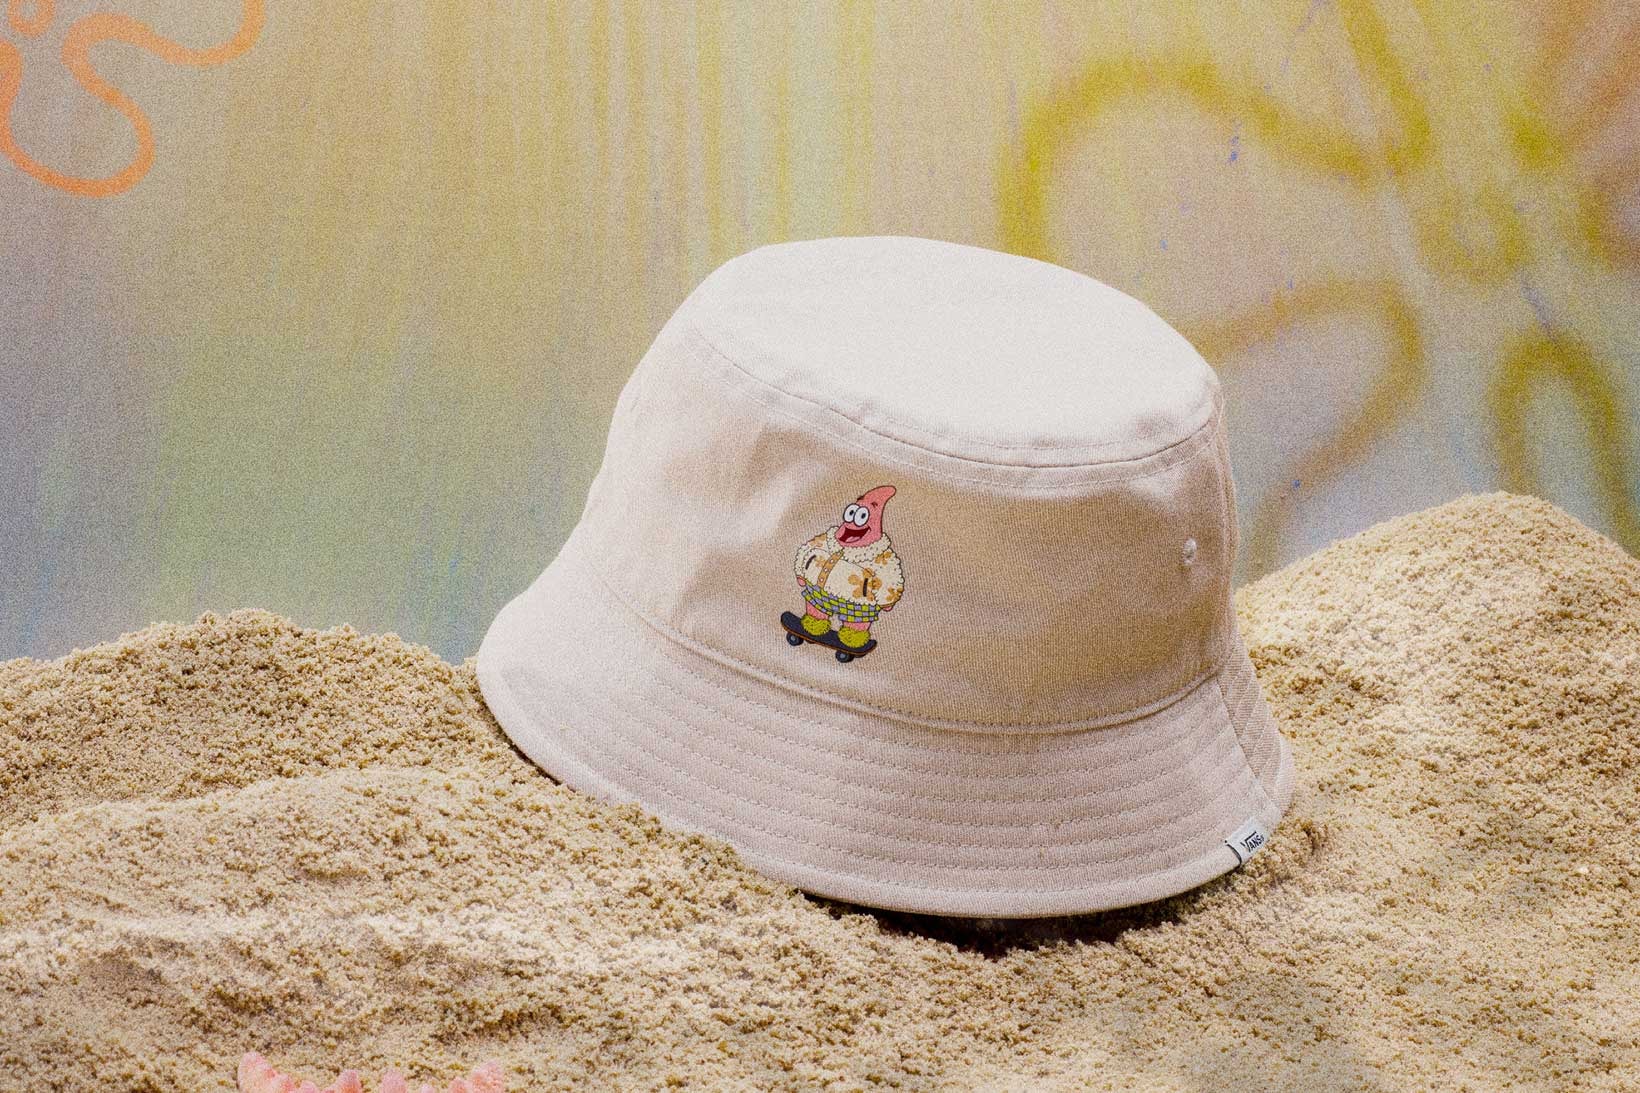 vans sandy liang spongebob squarepants nickelodeon bucket hat